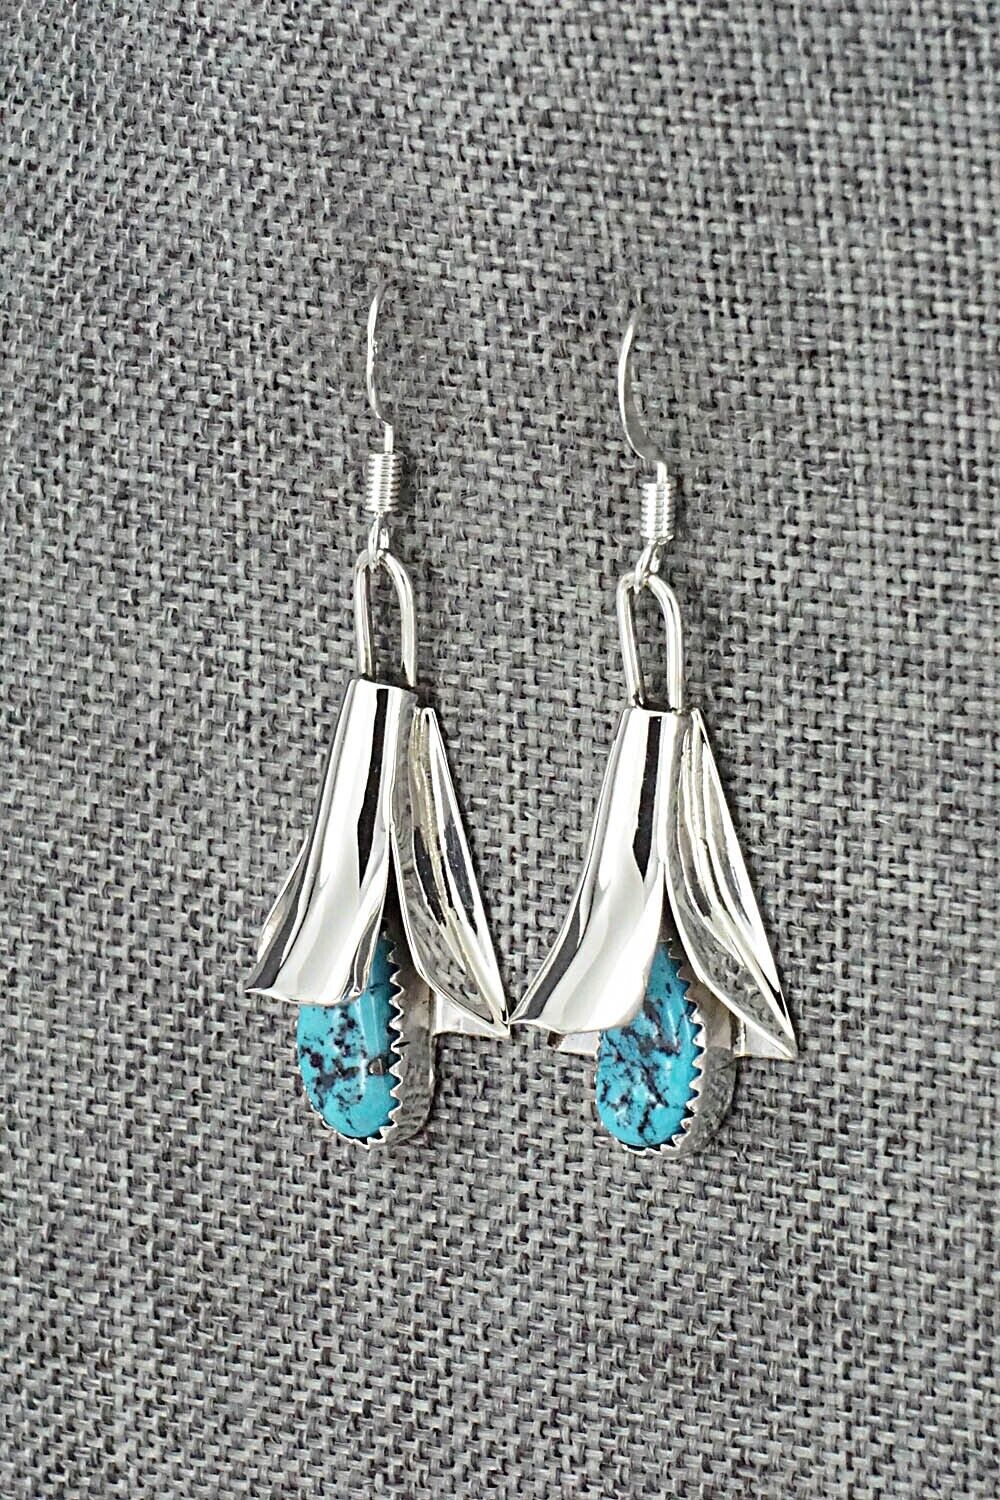 Turquoise & Sterling Silver Earrings - Louise Yazzie